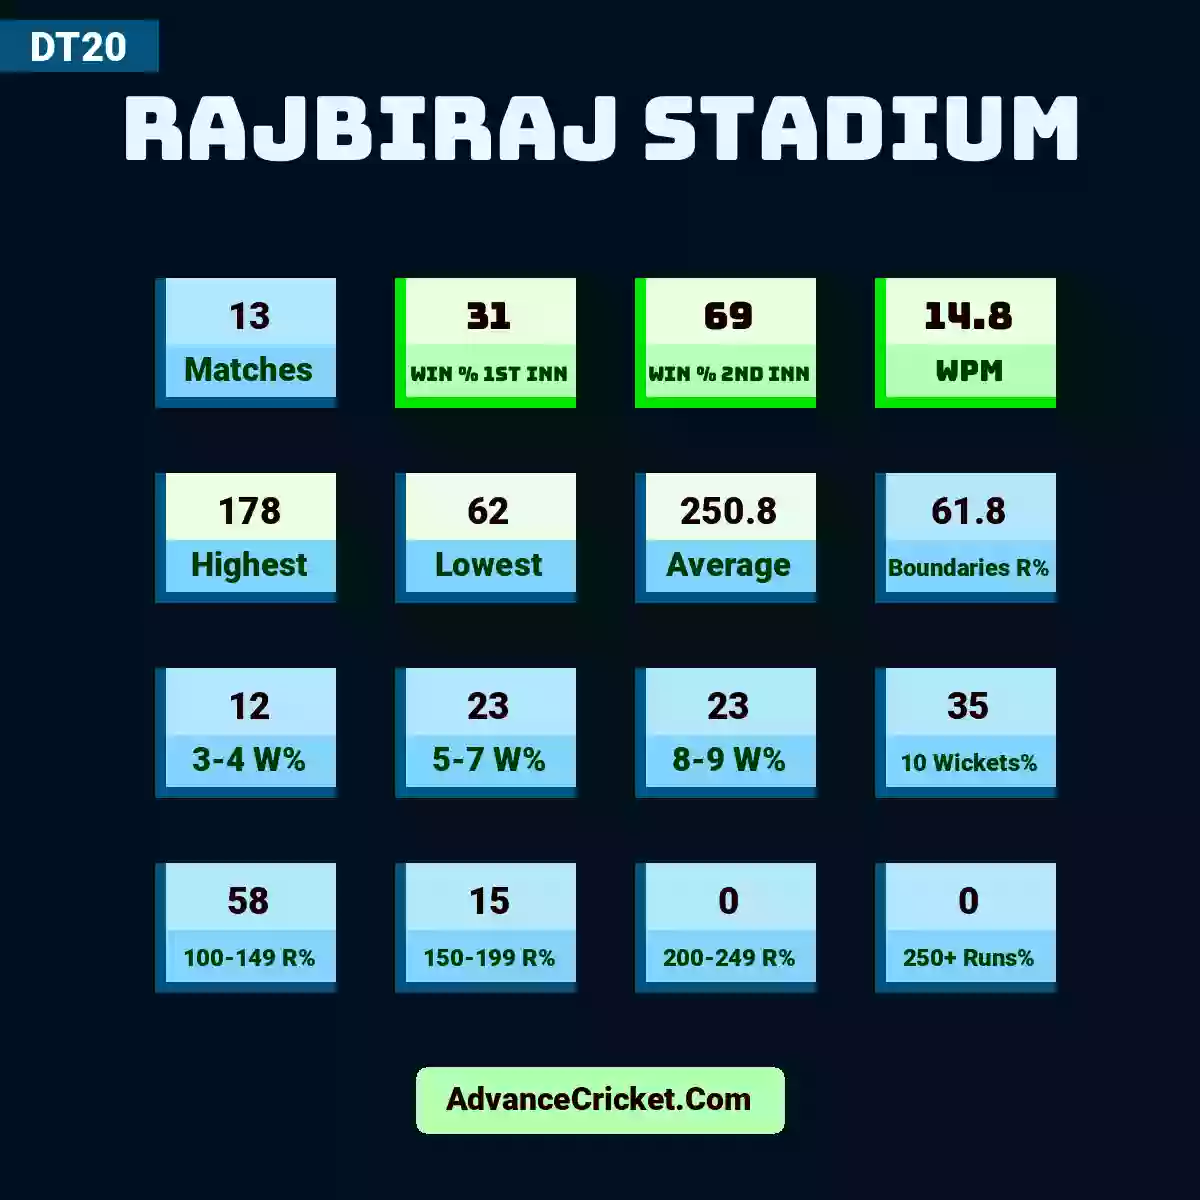 Image showing Rajbiraj Stadium with Matches: 13, Win % 1st Inn: 31, Win % 2nd Inn: 69, WPM: 14.8, Highest: 178, Lowest: 62, Average: 250.8, Boundaries R%: 61.8, 3-4 W%: 12, 5-7 W%: 23, 8-9 W%: 23, 10 Wickets%: 35, 100-149 R%: 58, 150-199 R%: 15, 200-249 R%: 0, 250+ Runs%: 0.